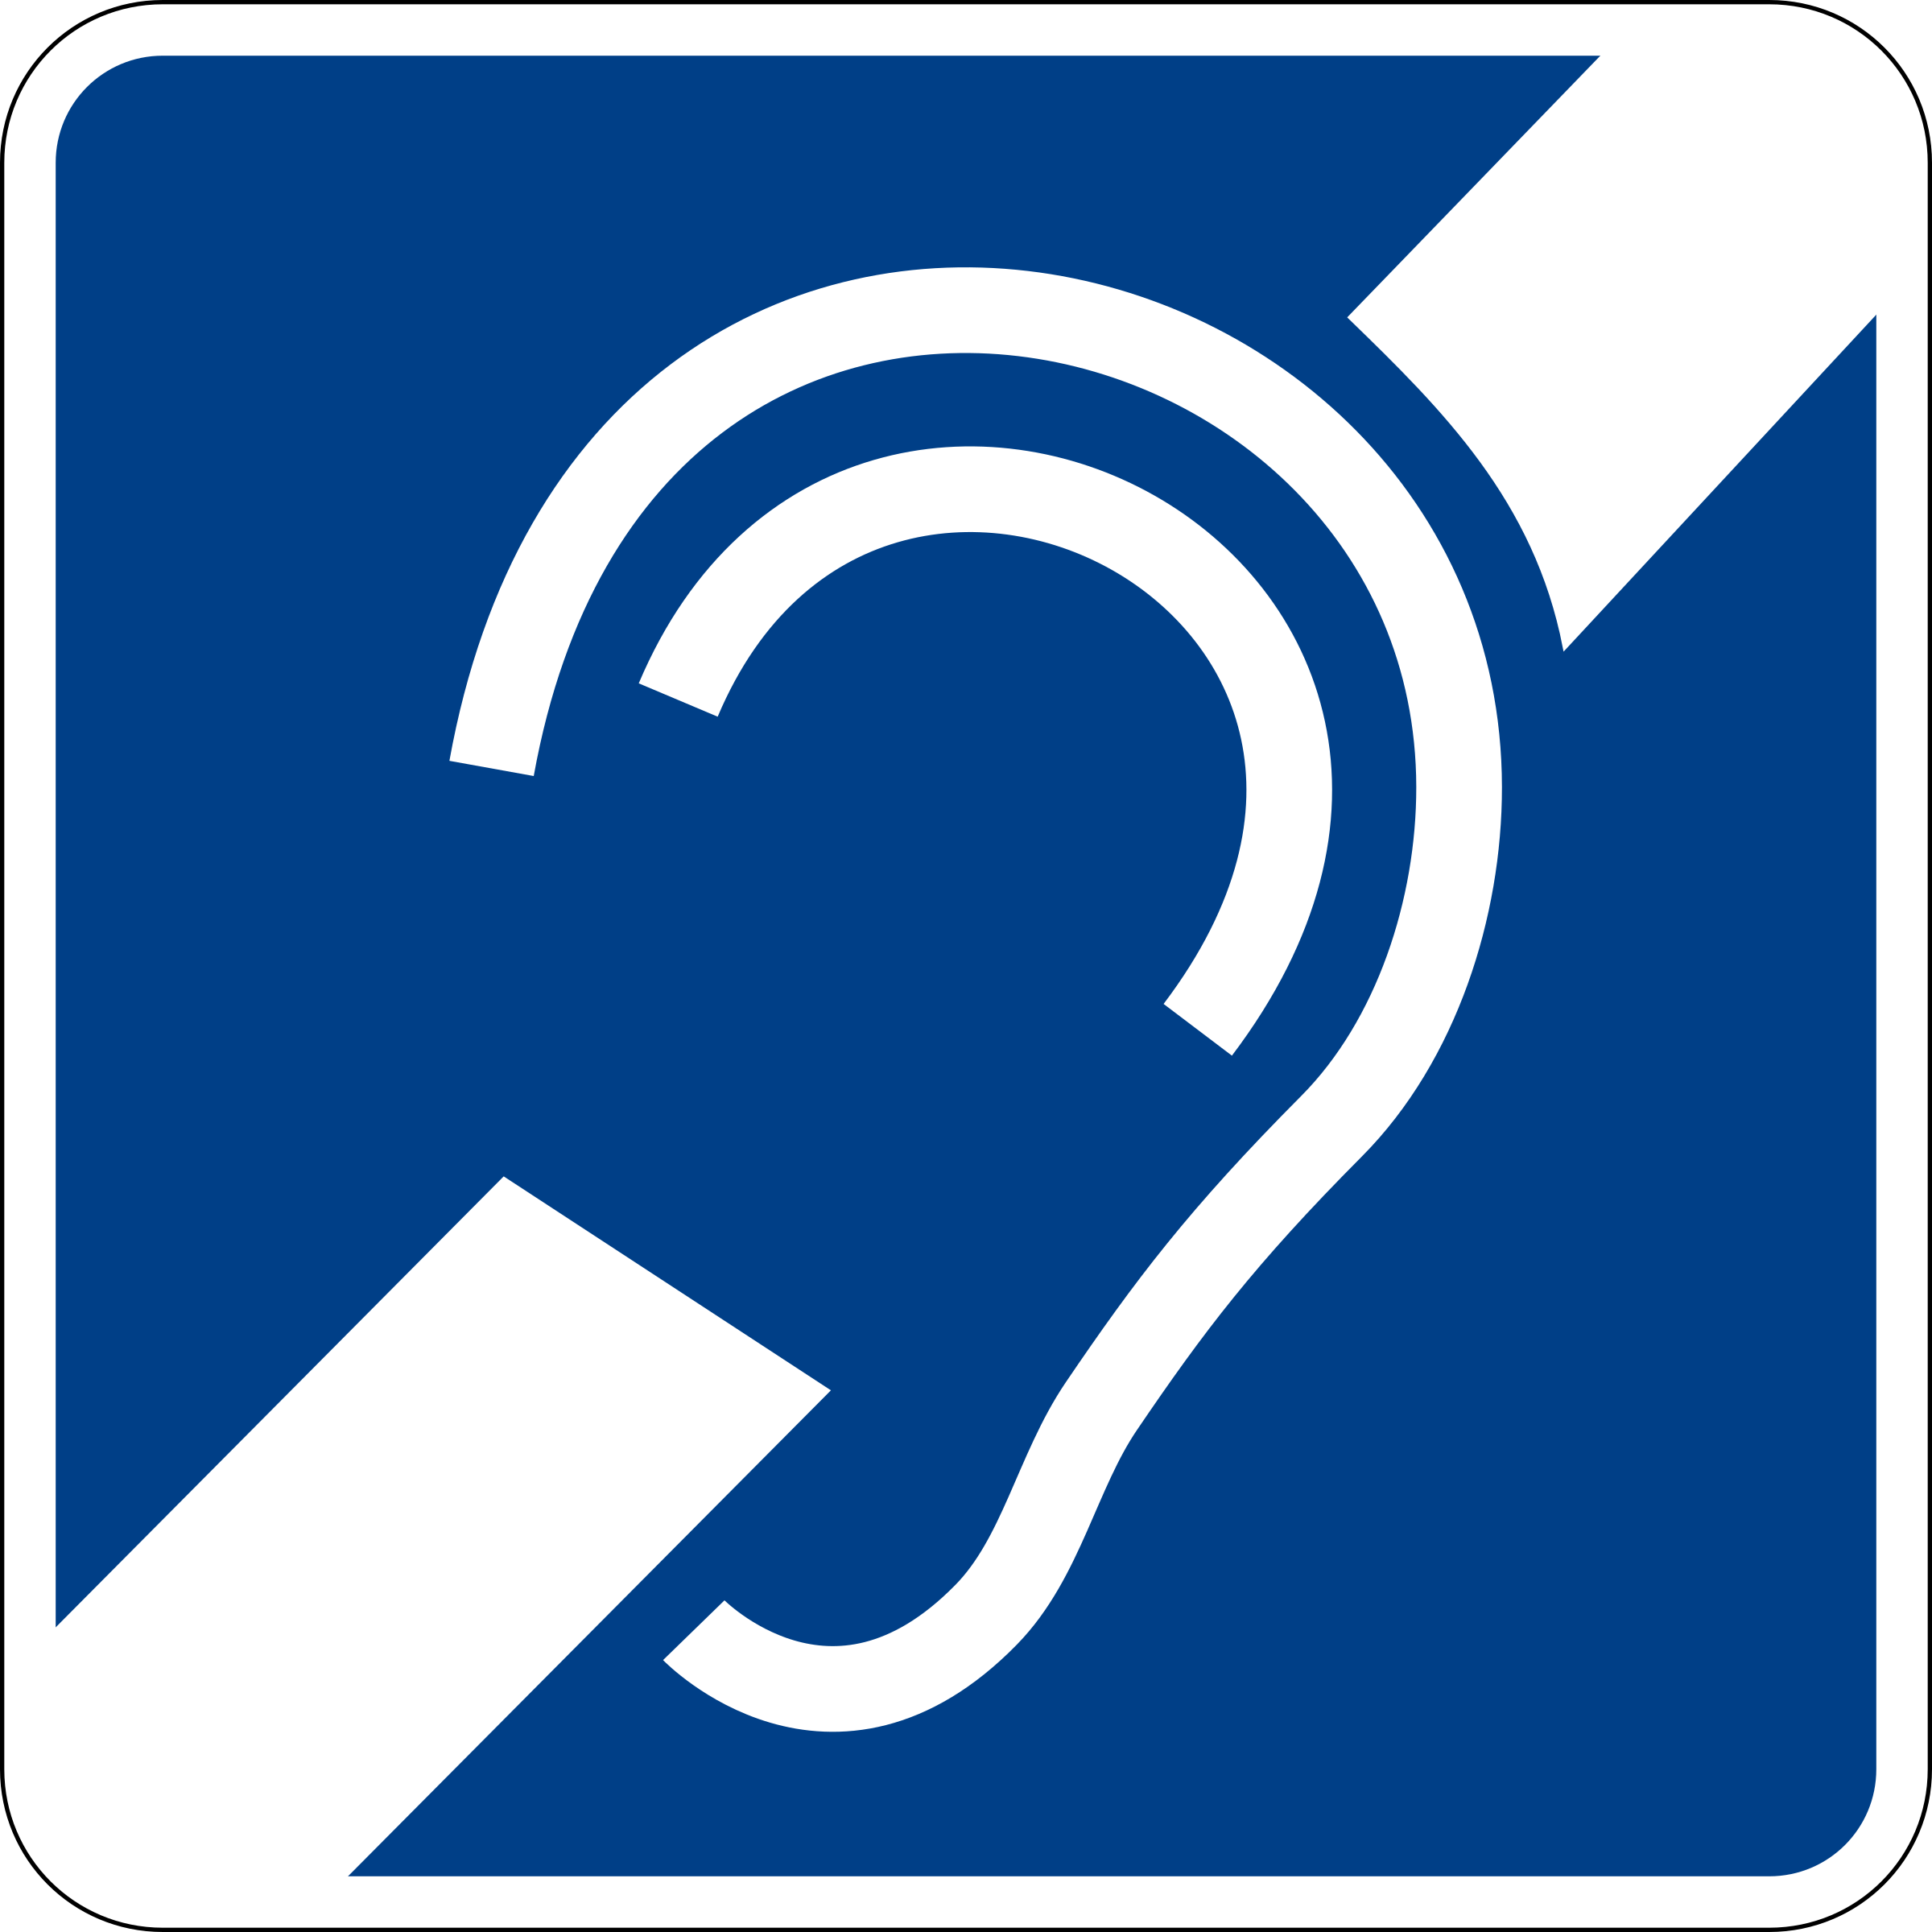 Free clipart hearing impaired - ClipartFox